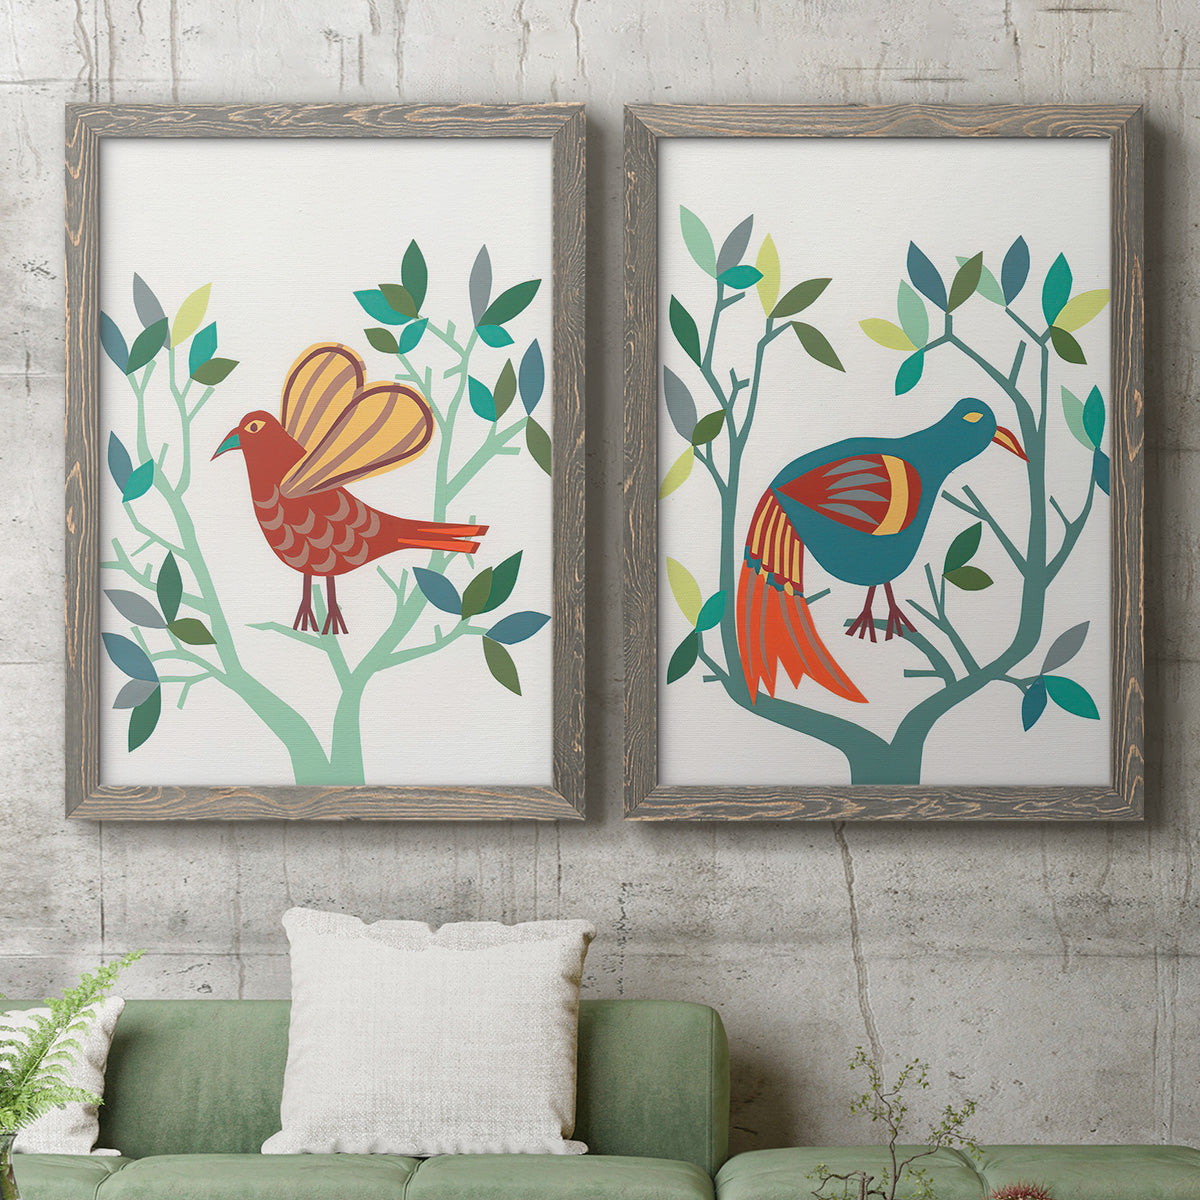 Whitty Bird I - Premium Framed Canvas 2 Piece Set - Ready to Hang